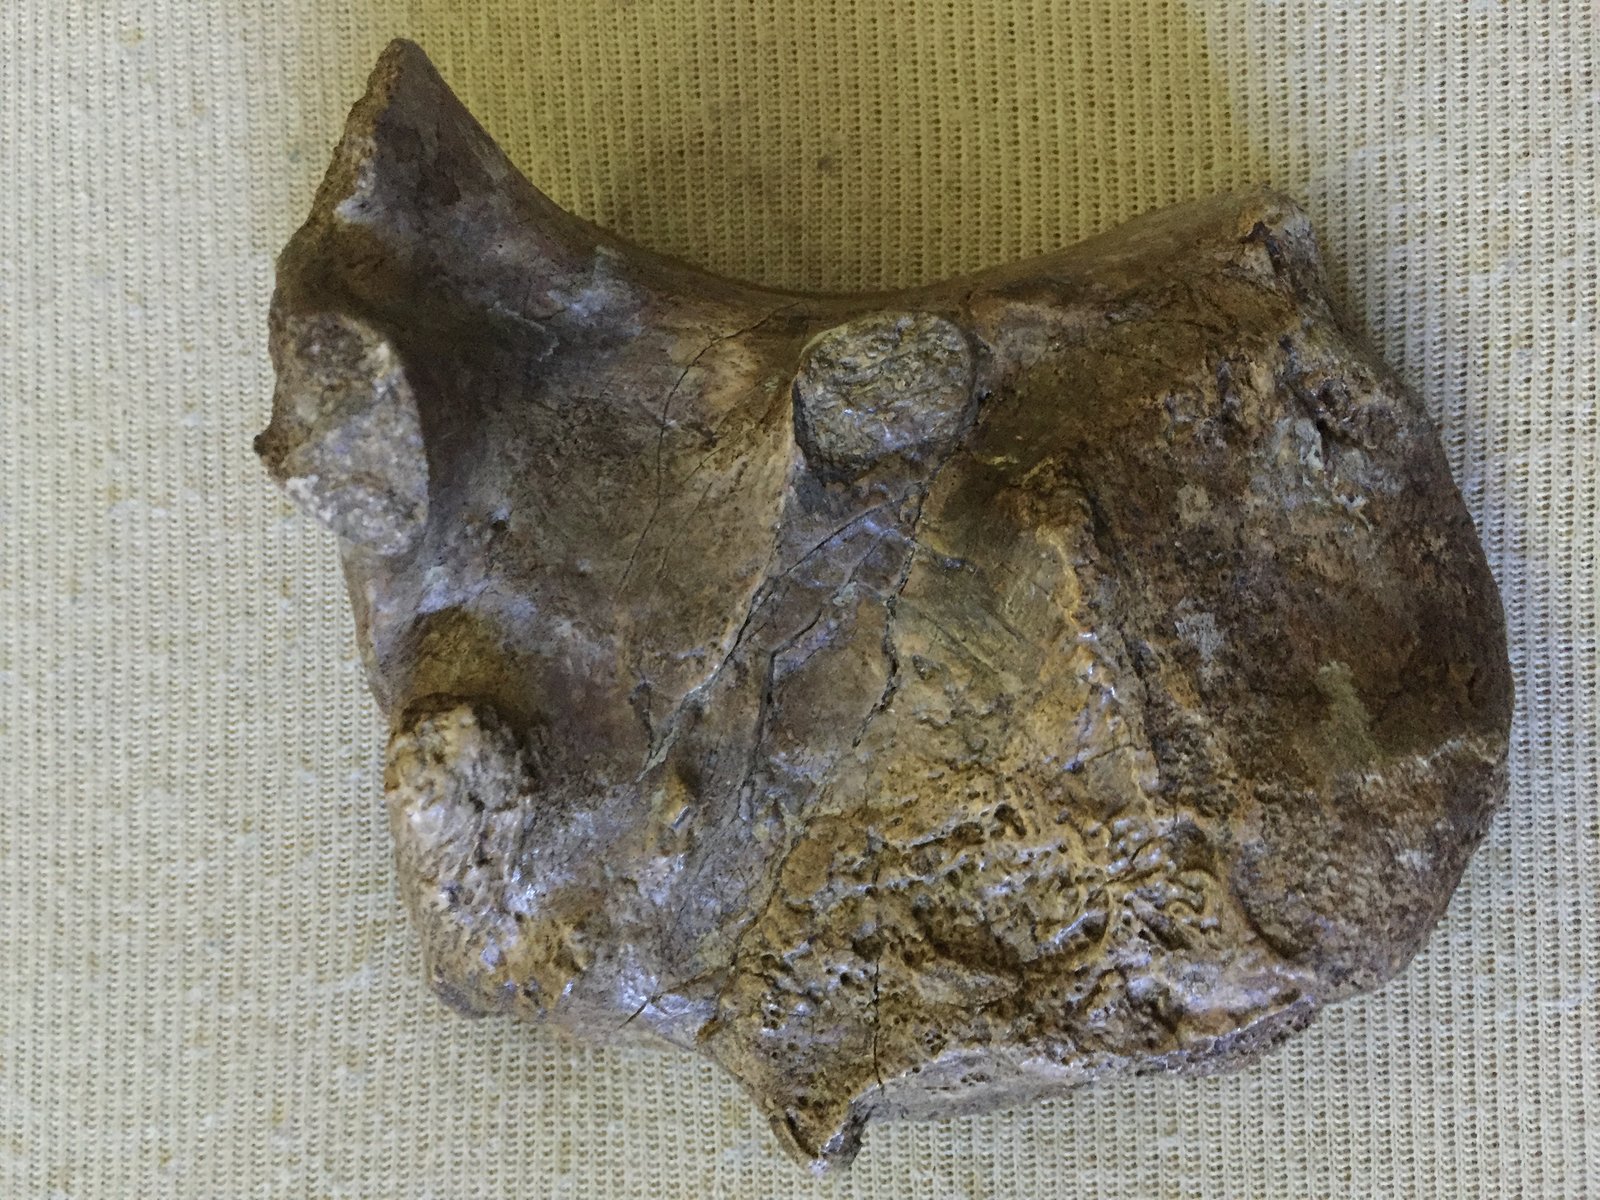 Edaphosaurus bone with large bite mark from an apparent Dimetrodon